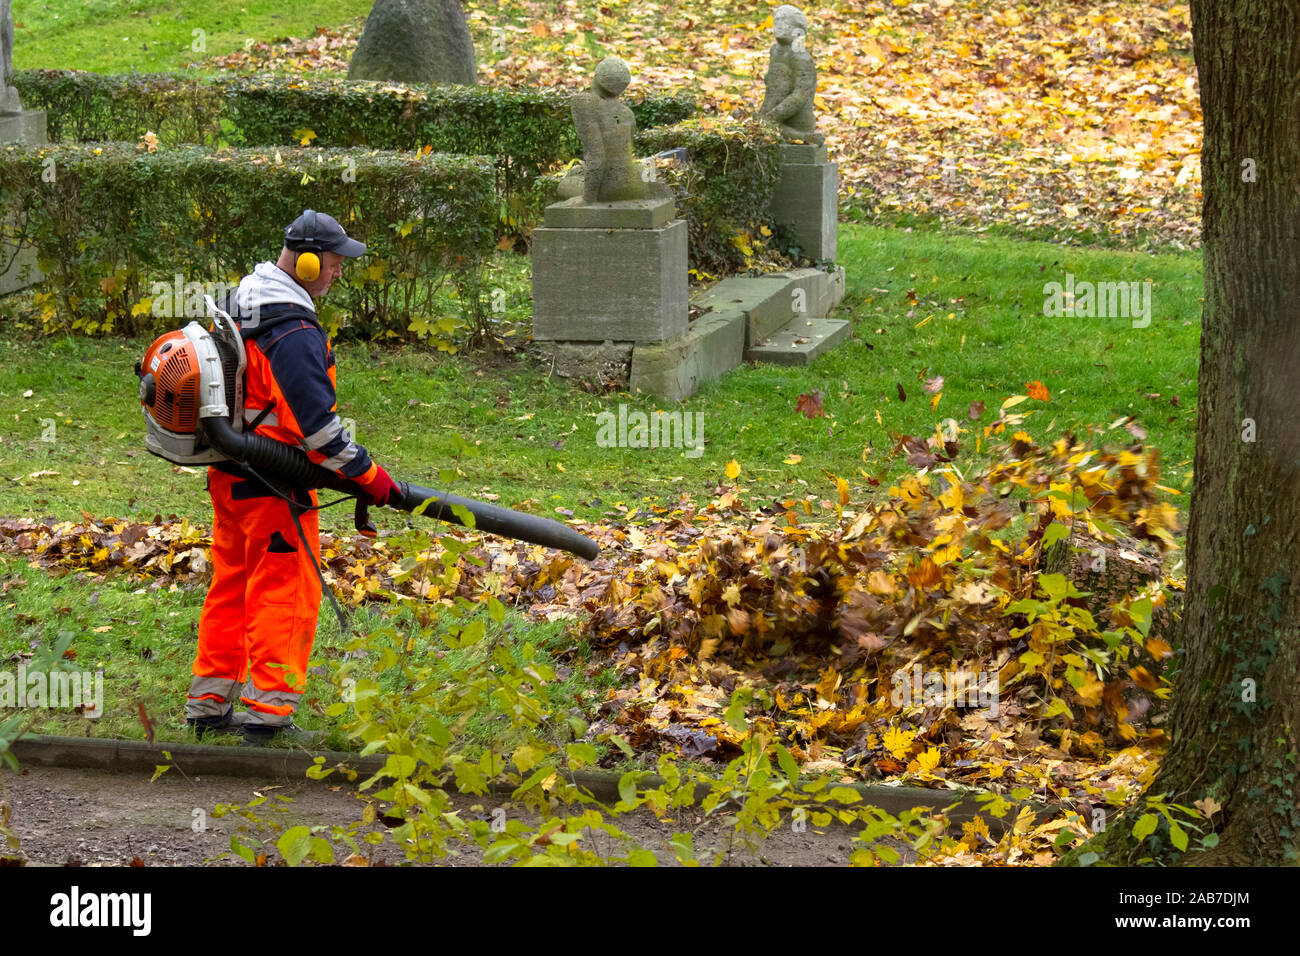 worker with a backpack leaf blower in a public park in the city of Wetter, North Rhine-Westphalia, Germany.  Arbeiter mit einem Laubblaeser in einem o Stock Photo